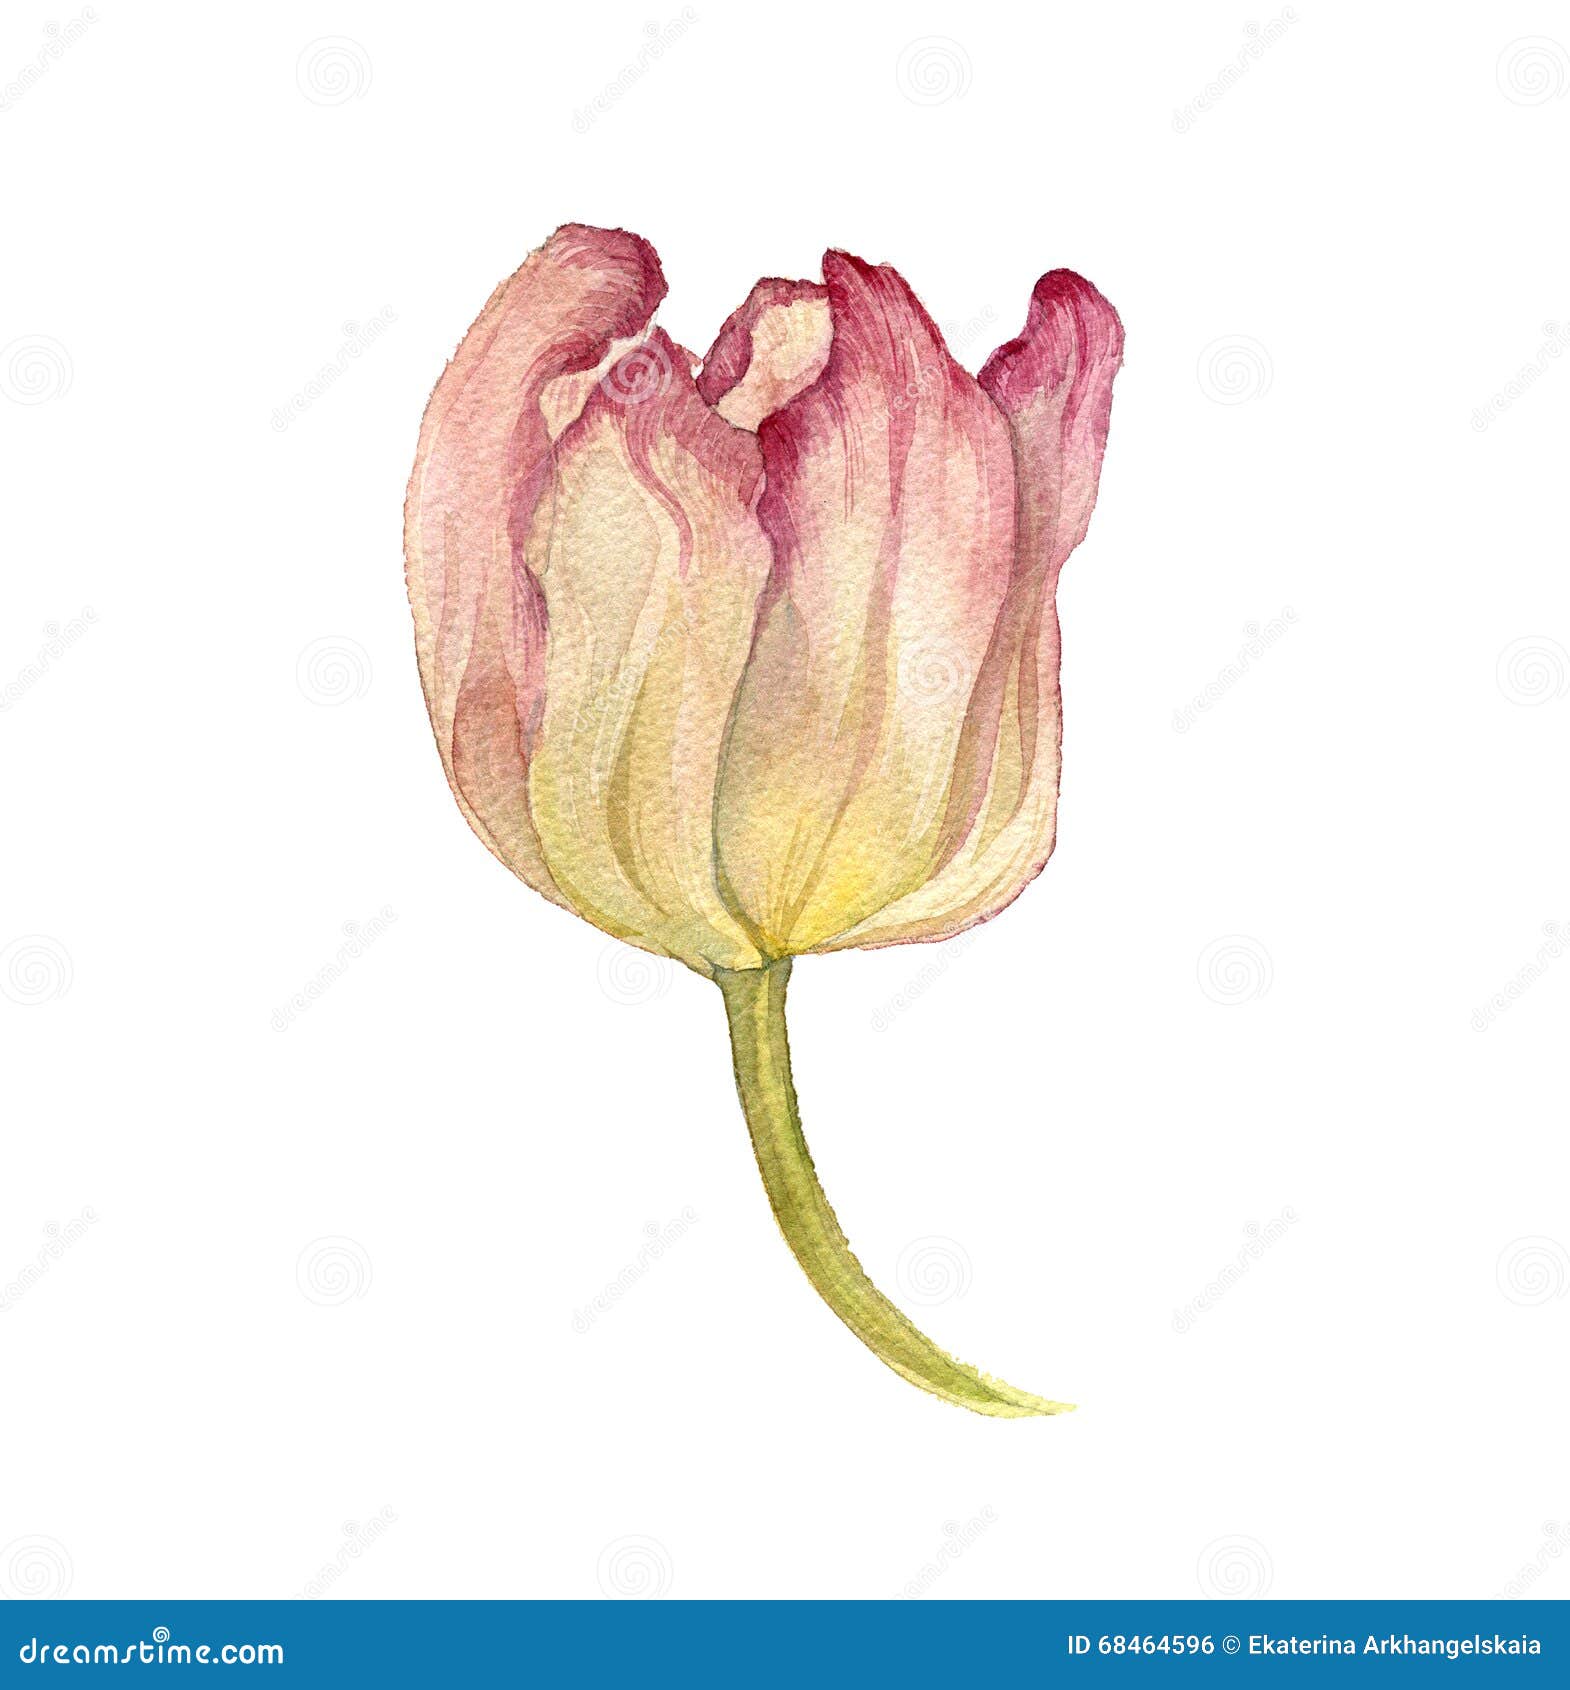 Watercolor pink tulip stock illustration. Illustration of bunch - 68464596